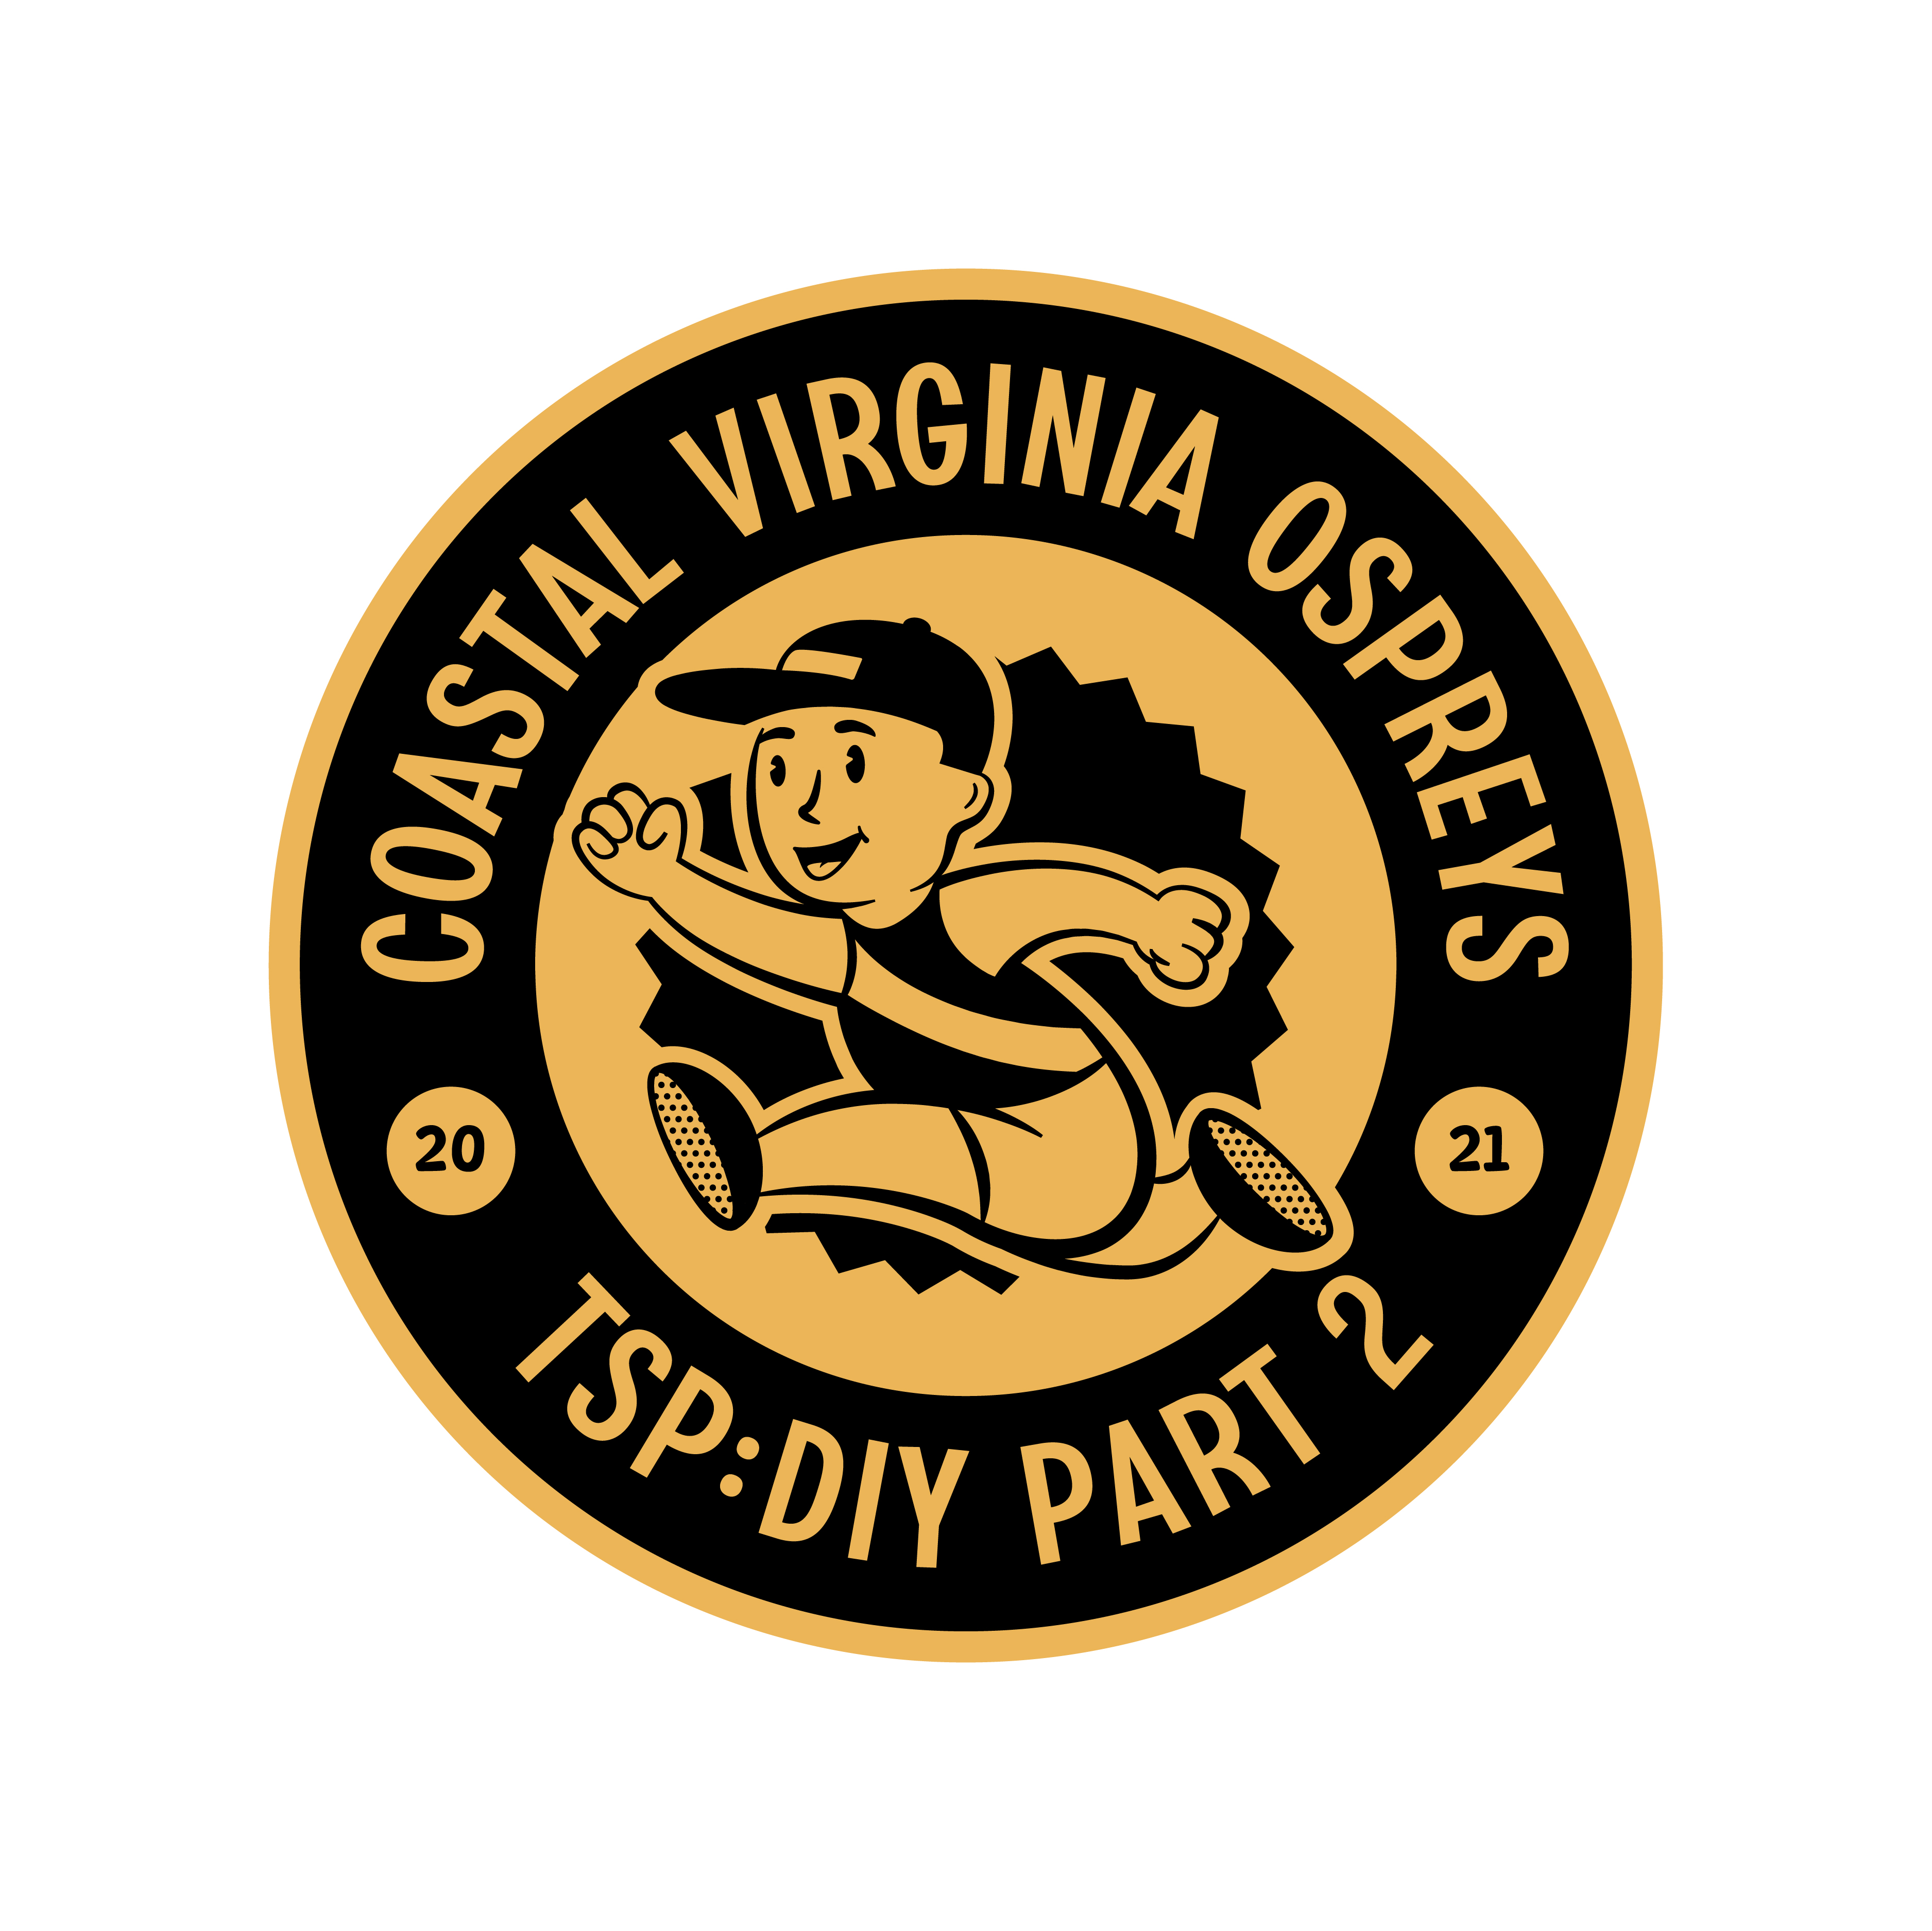 Costal Virginia Ospreys 2021 logo design by logo designer Wandel Design for your inspiration and for the worlds largest logo competition